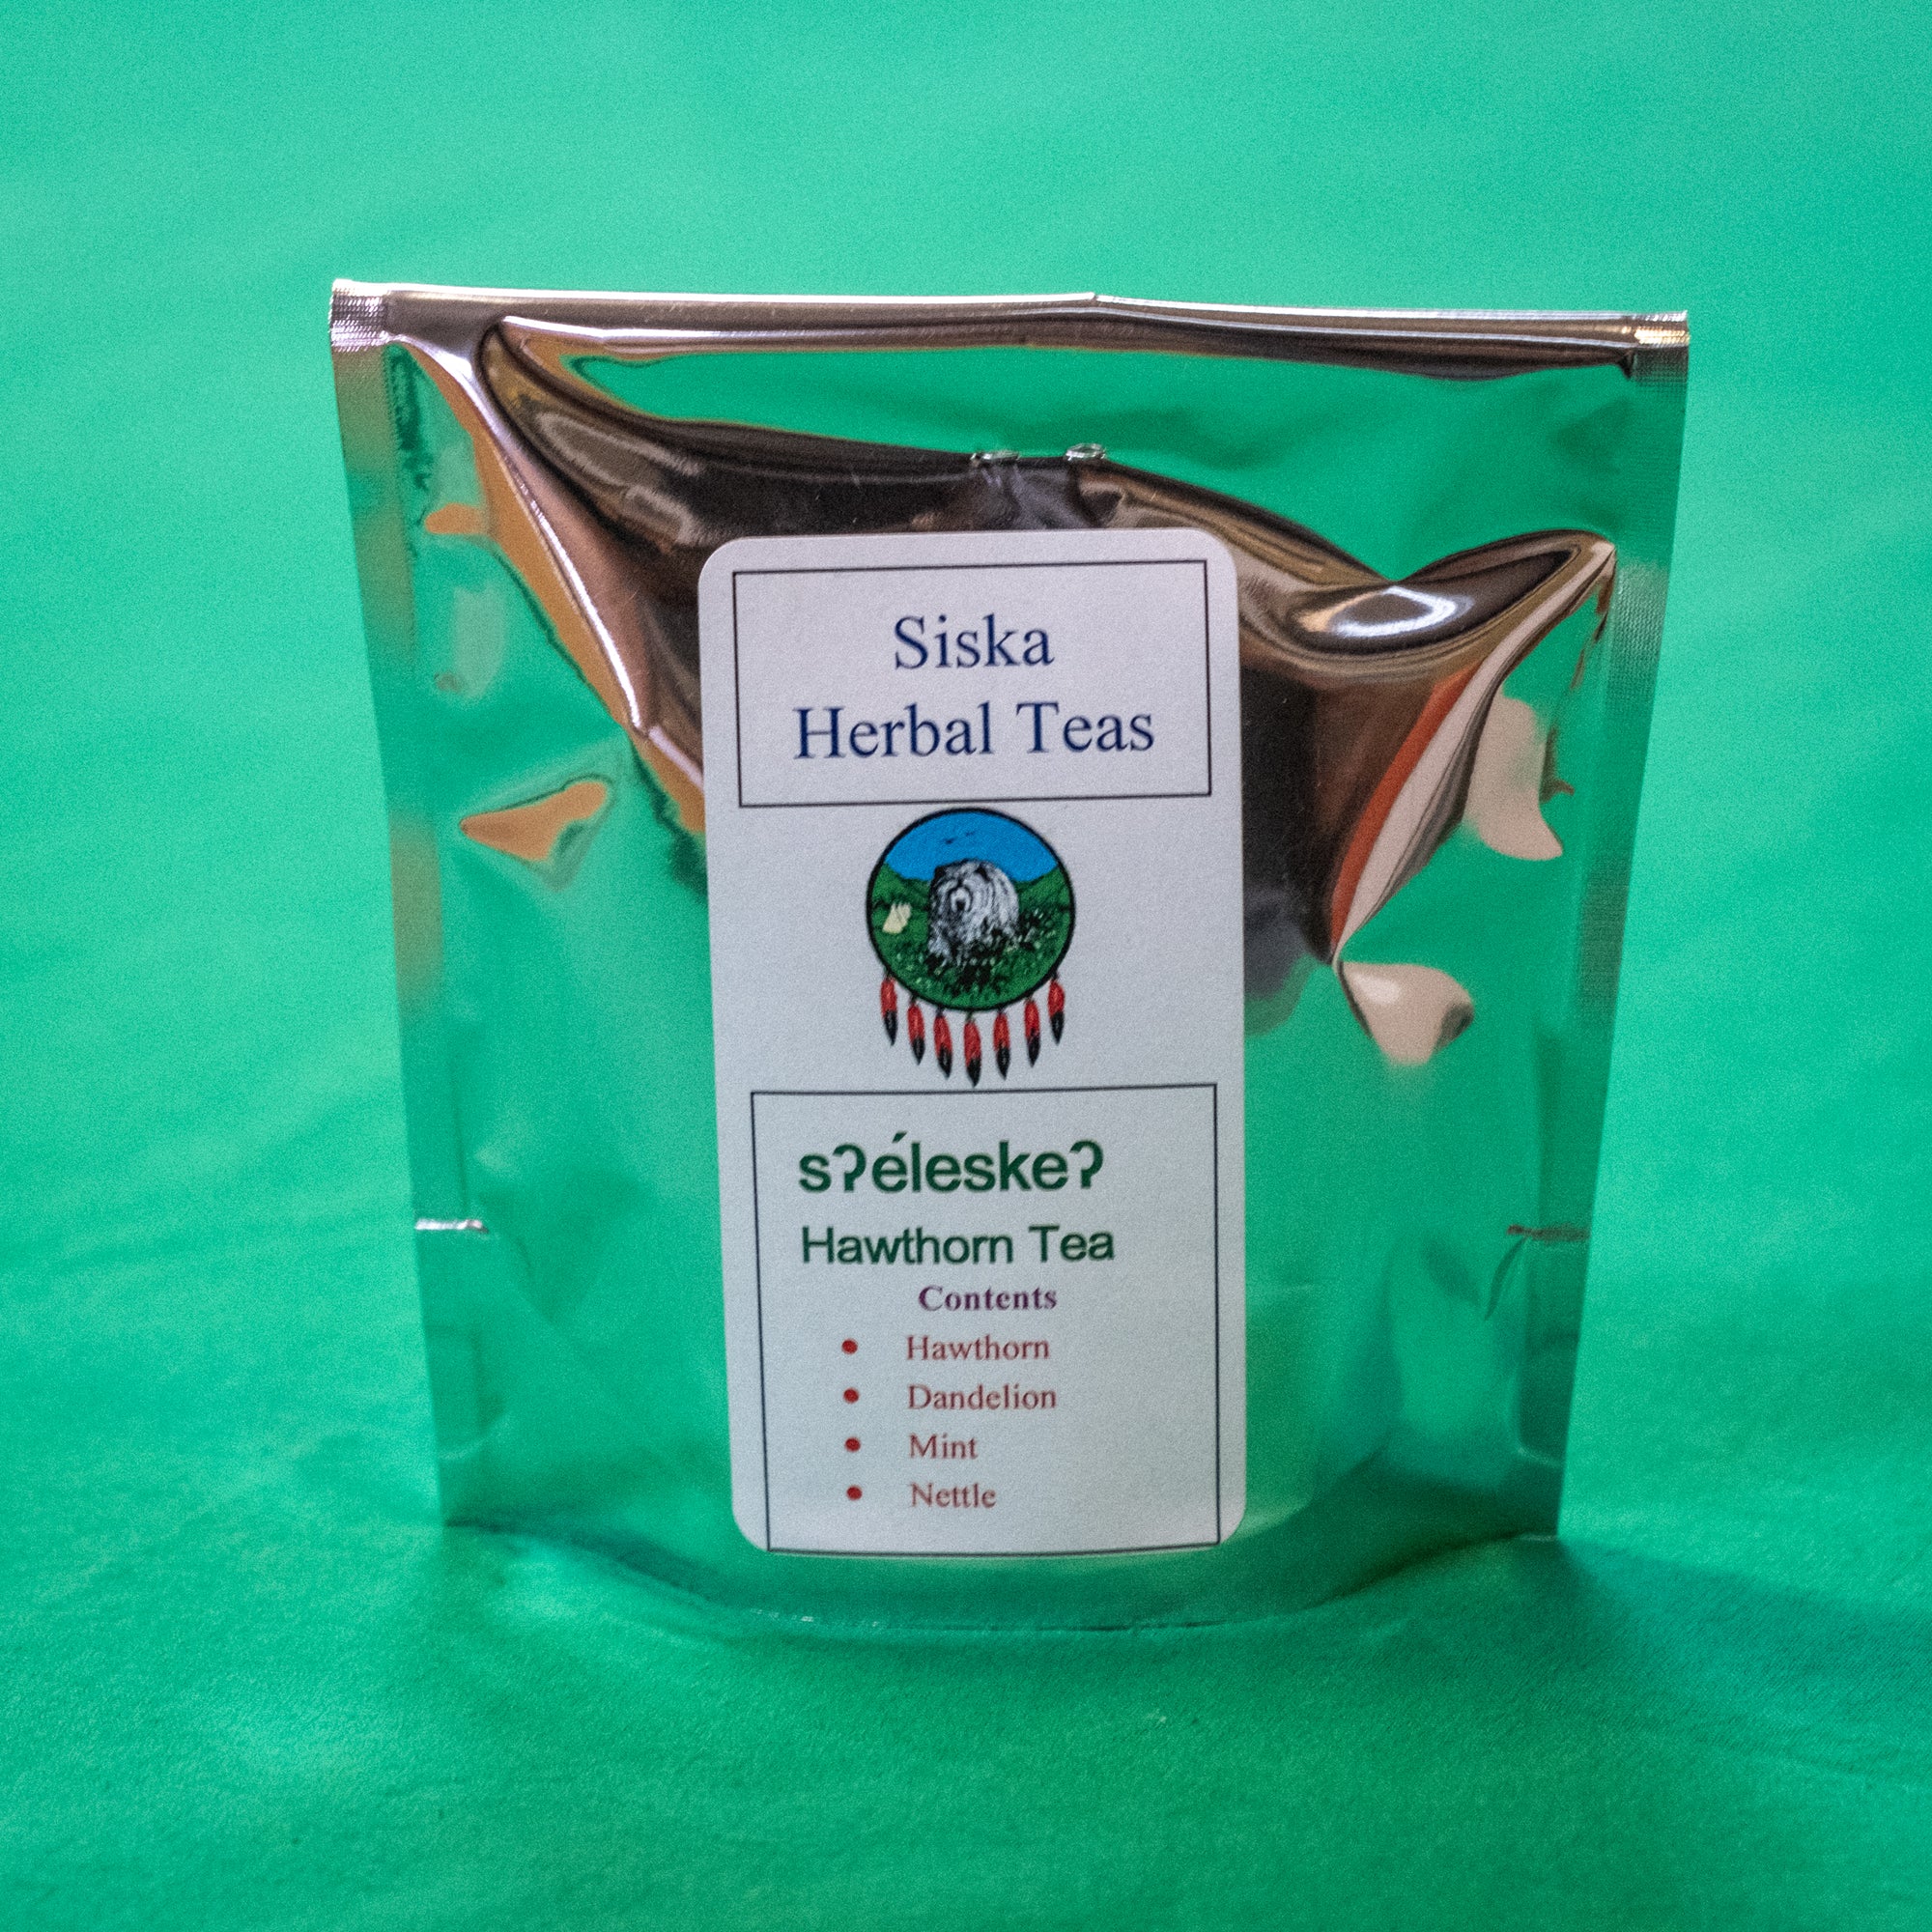 A pack of tea, label says "Siska Herbal Teas. Hawthorn Tea. Content hawthorn, dandelion, mint, nettle." End of image description.